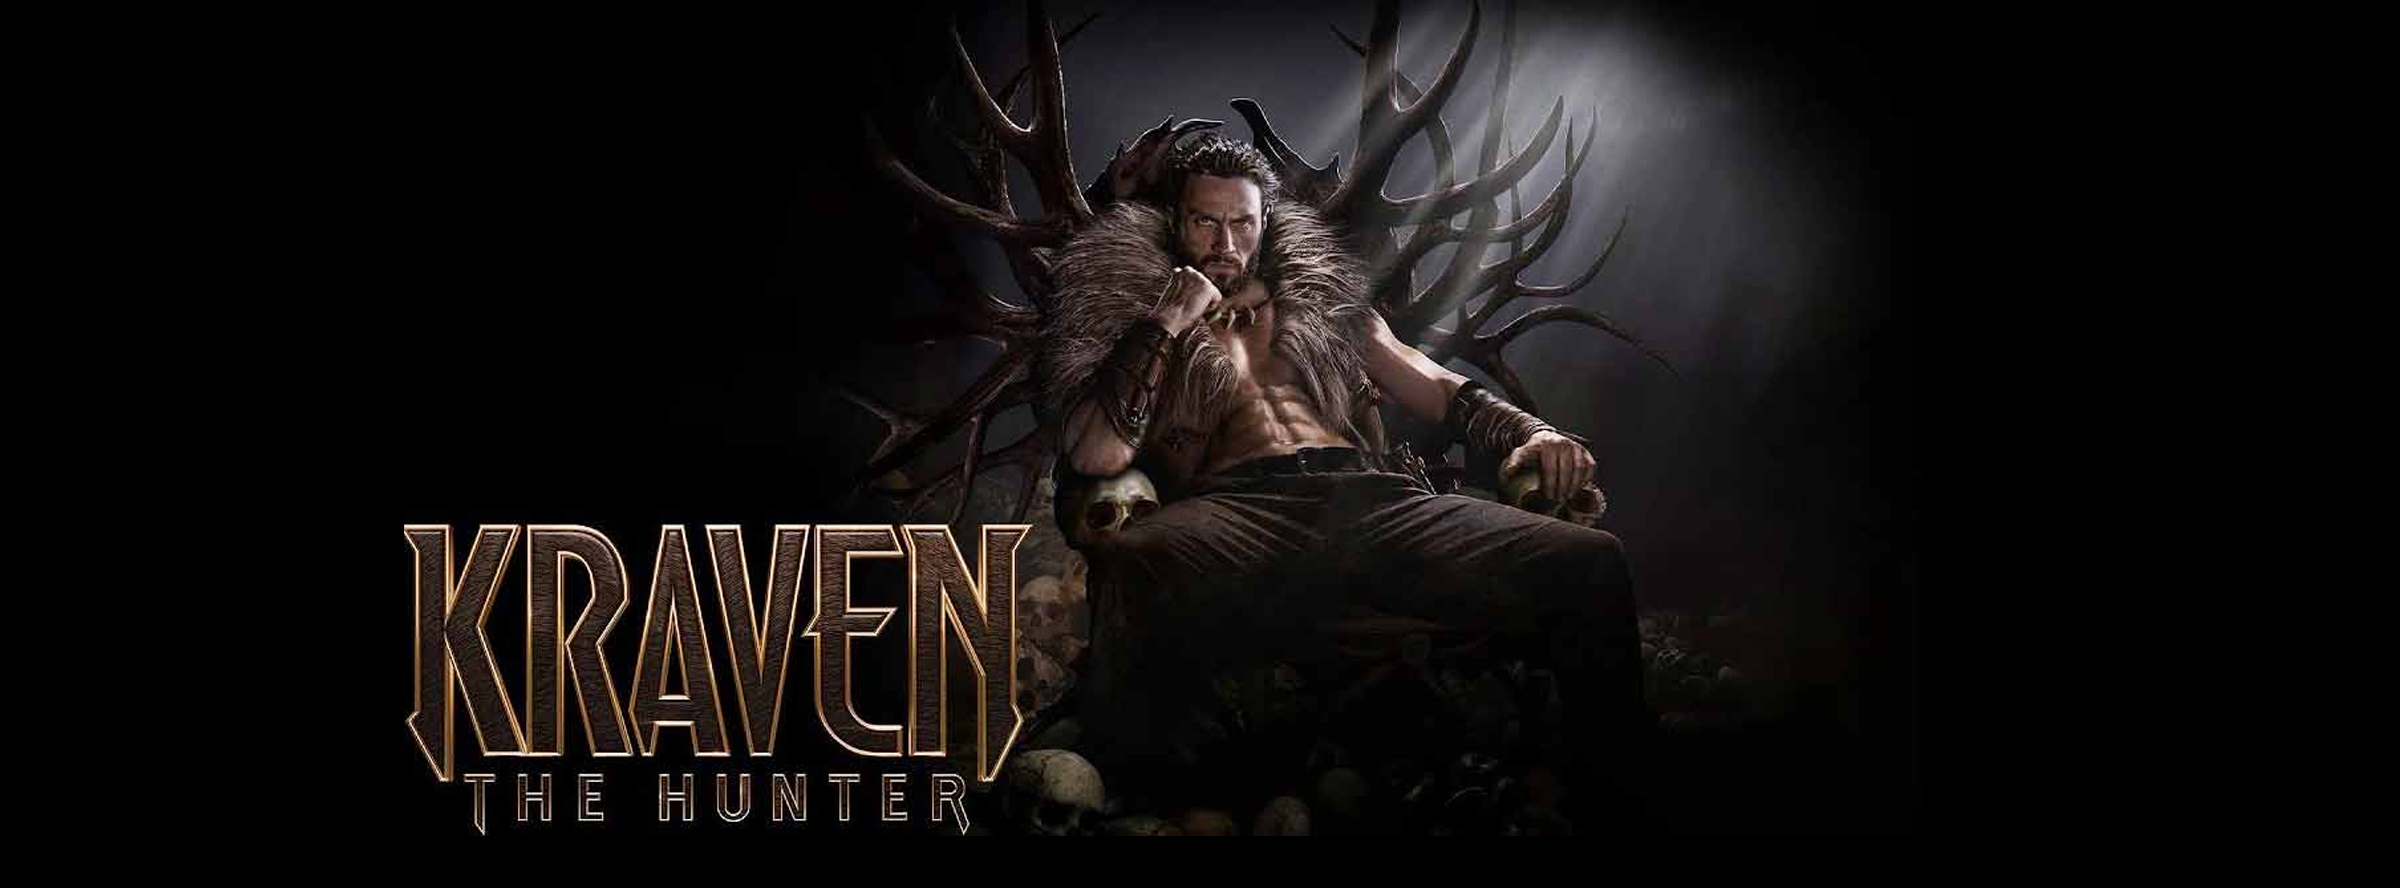 werewolf by night Movie tamil explanation, 2022 horror Marvel comic, Raven